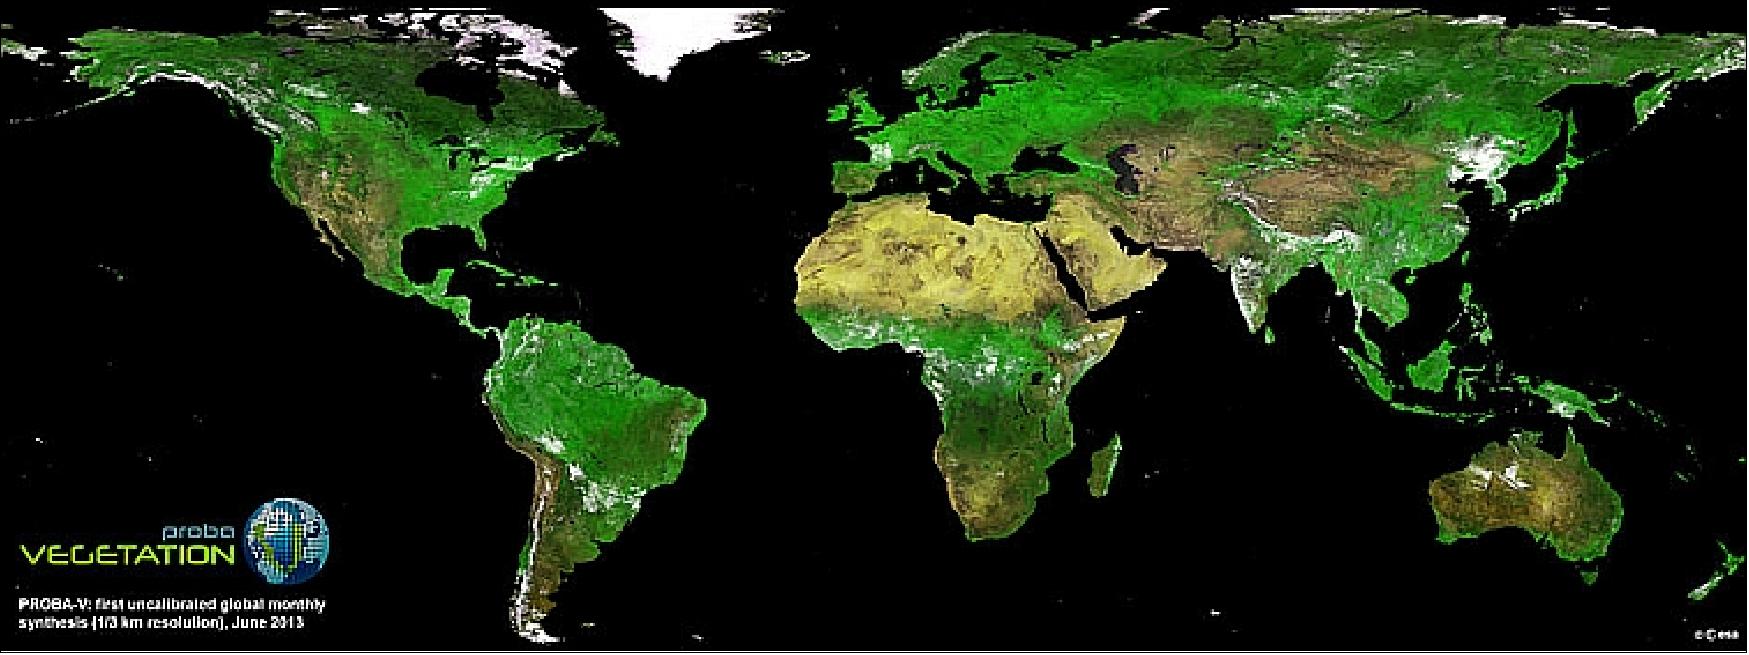 Figure 63: First uncalibrated global mosaic of vegetation from PROBA-V, June 2013 (image credit: ESA)